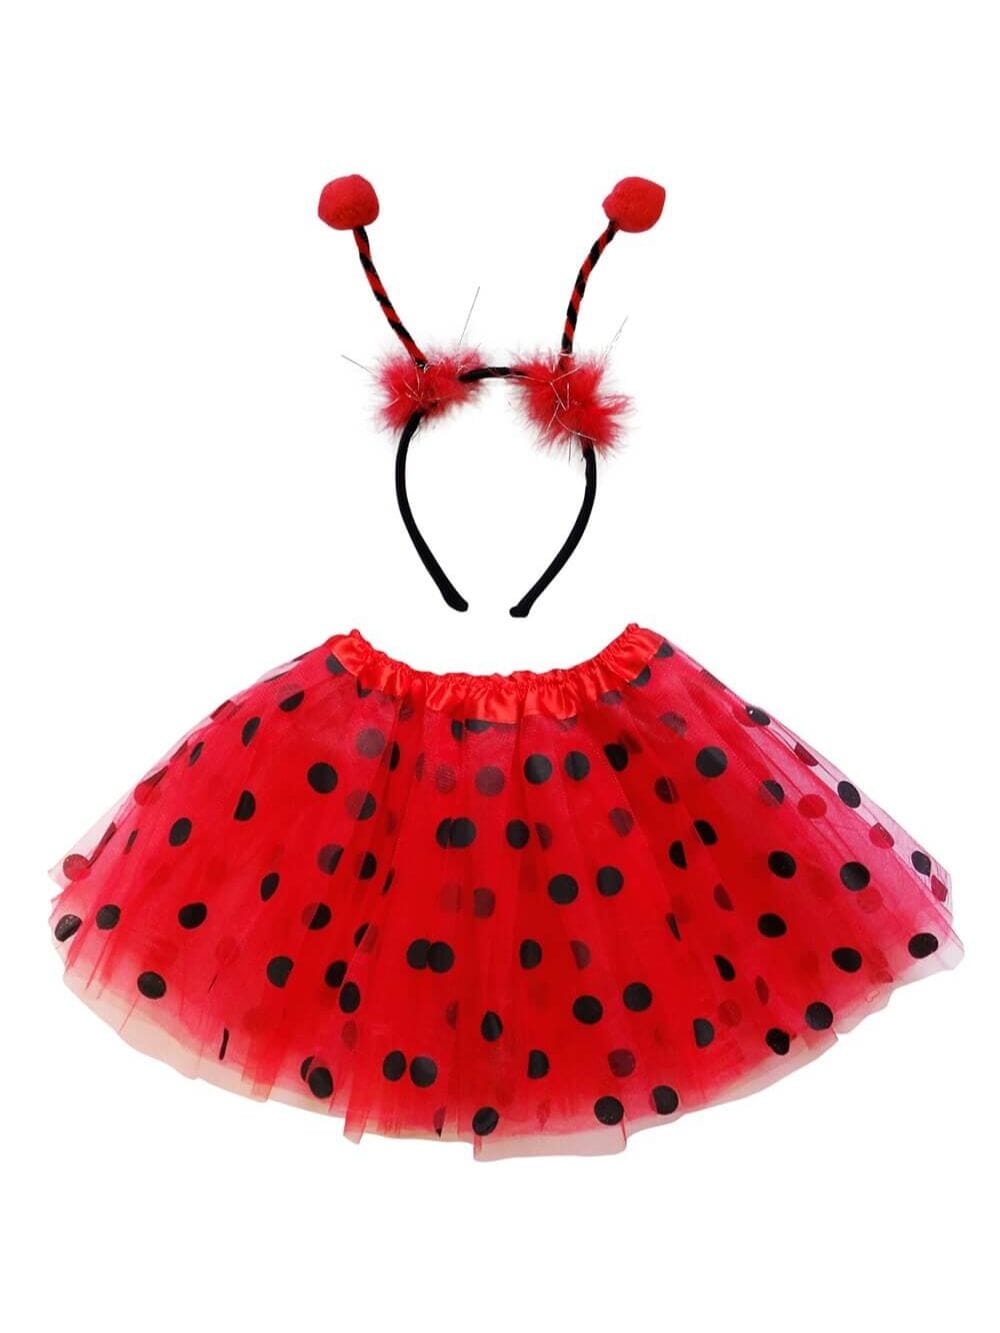 Adult Ladybug Costume - Red Polka Dot Tutu Skirt & Headband Antenna Set for Adult or Plus Size - Sydney So Sweet